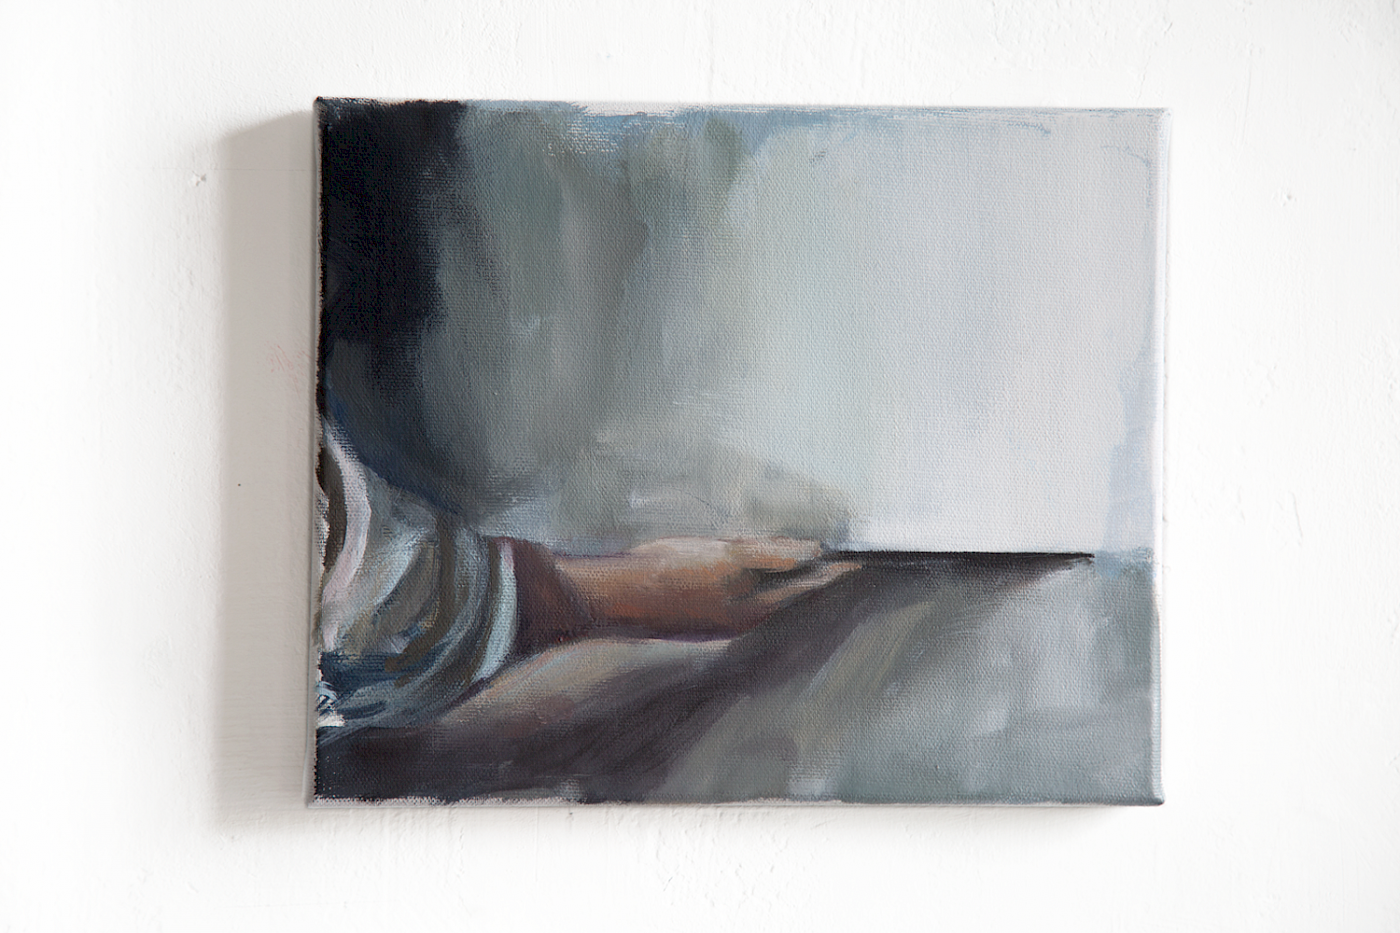 Thunder, nach Borremans, Oelfarbe auf Leinwand, 27 x 22 cm, 2020